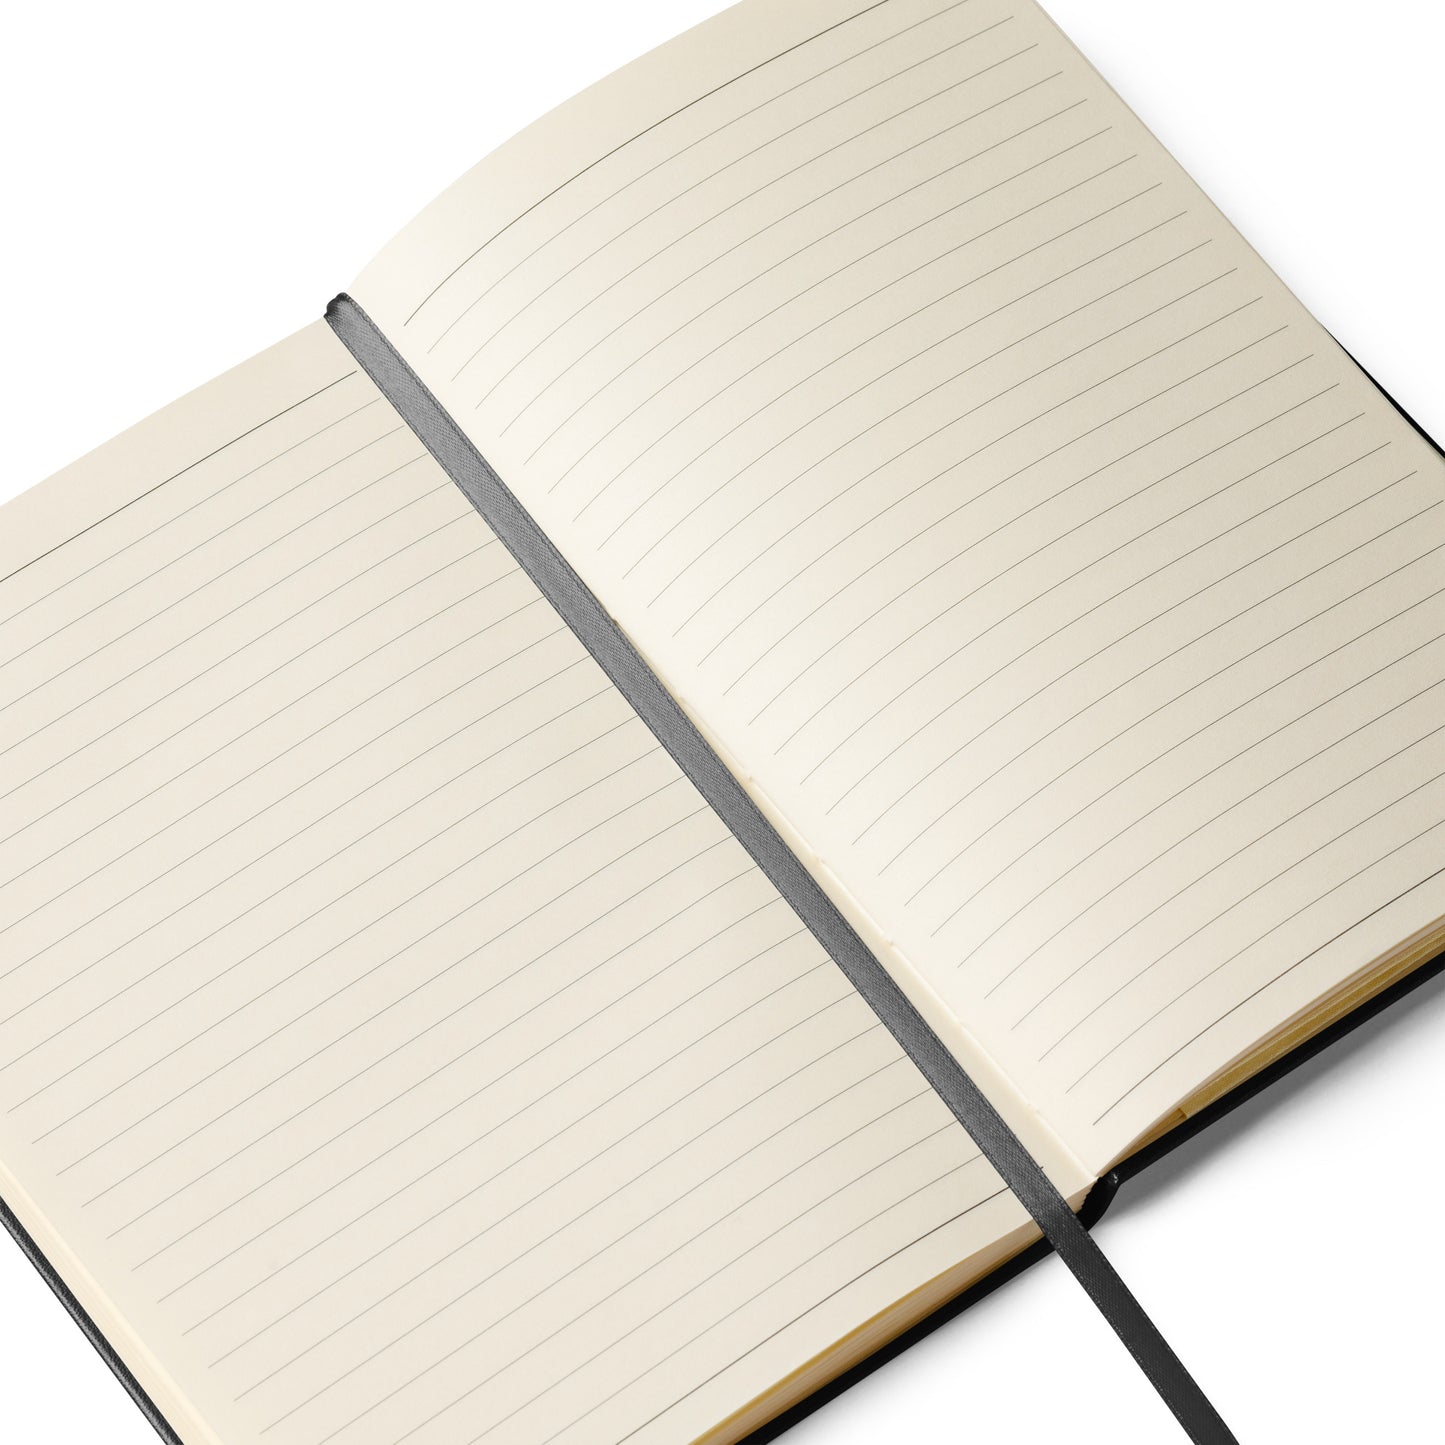 Magic Hardcover Bound Notebook